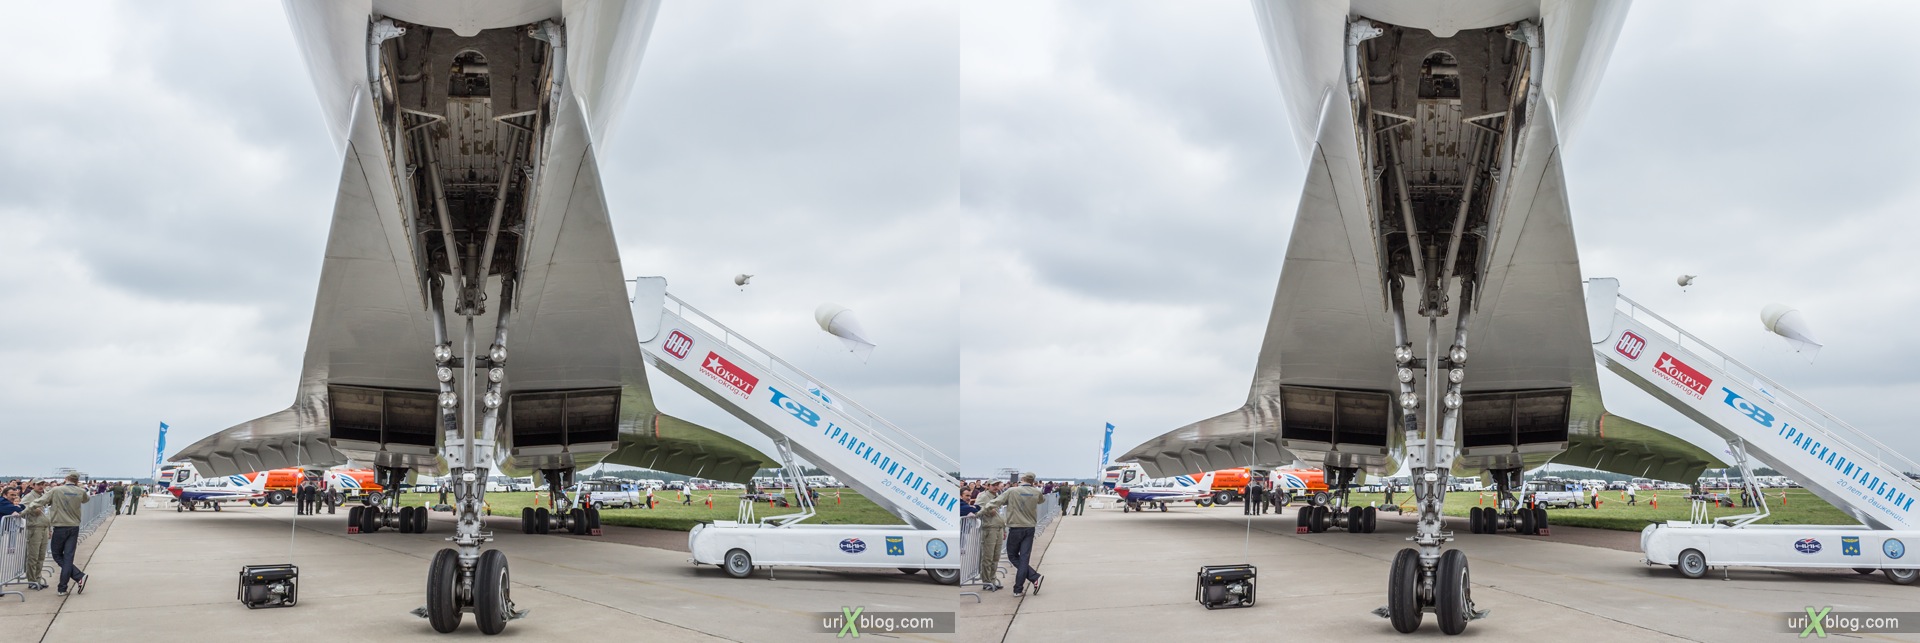 2013, Tu-144, MAKS, International Aviation and Space Salon, Russia, Ramenskoye airfield, airplane, 3D, stereo pair, cross-eyed, crossview, cross view stereo pair, stereoscopic